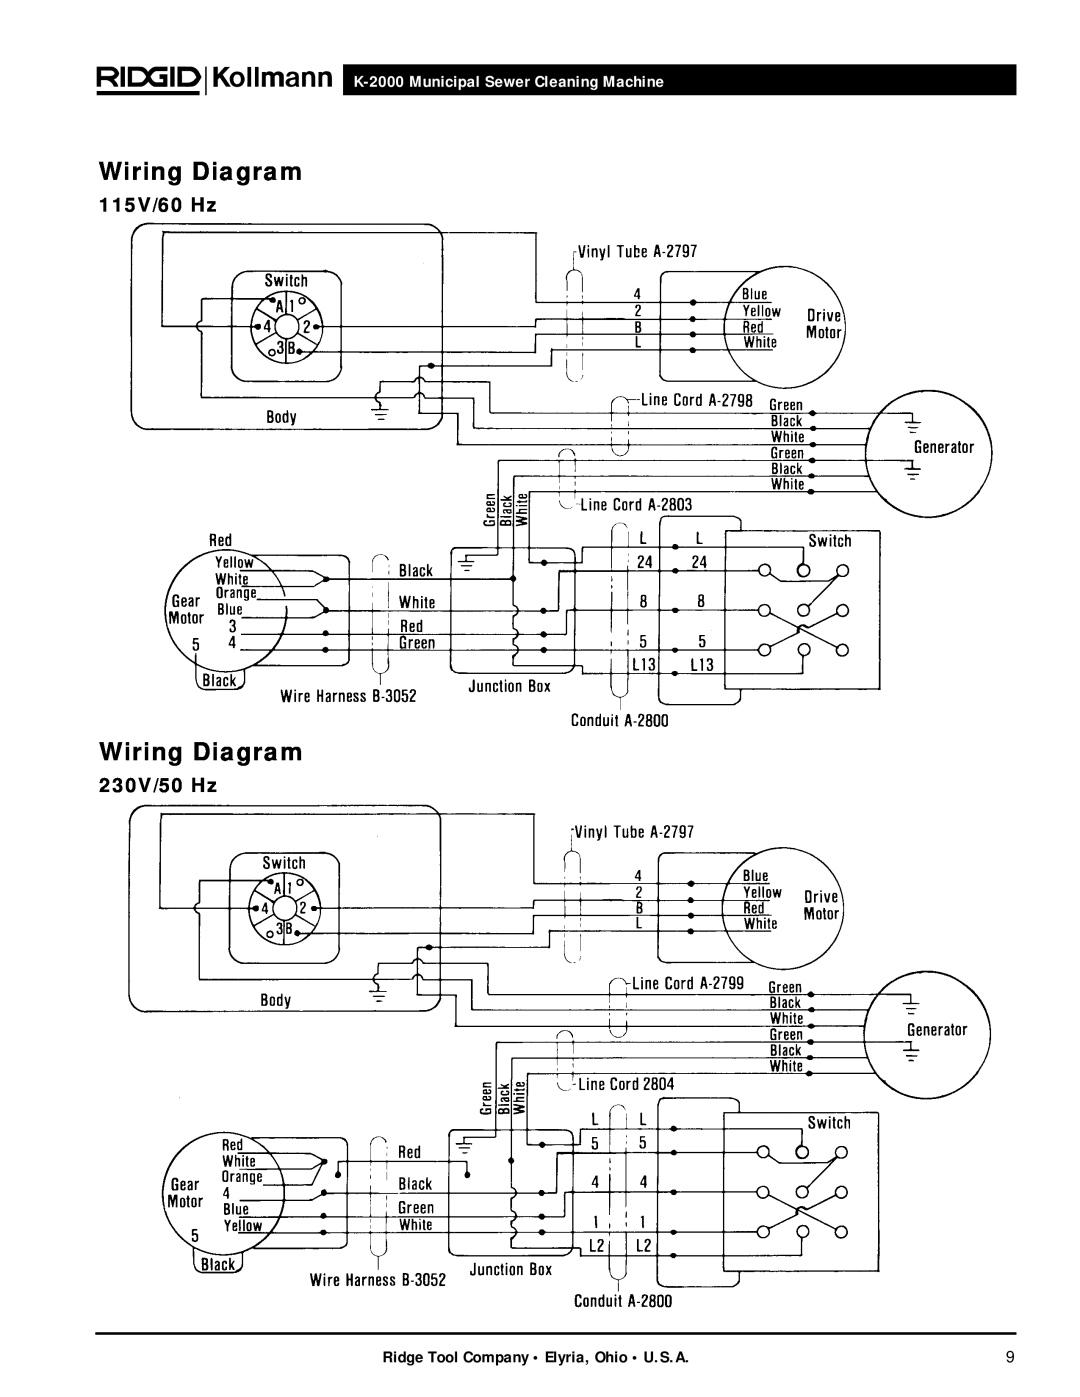 RIDGID manual Wiring Diagram, 115V/60 Hz, 230V/50 Hz, K-2000 Municipal Sewer Cleaning Machine 